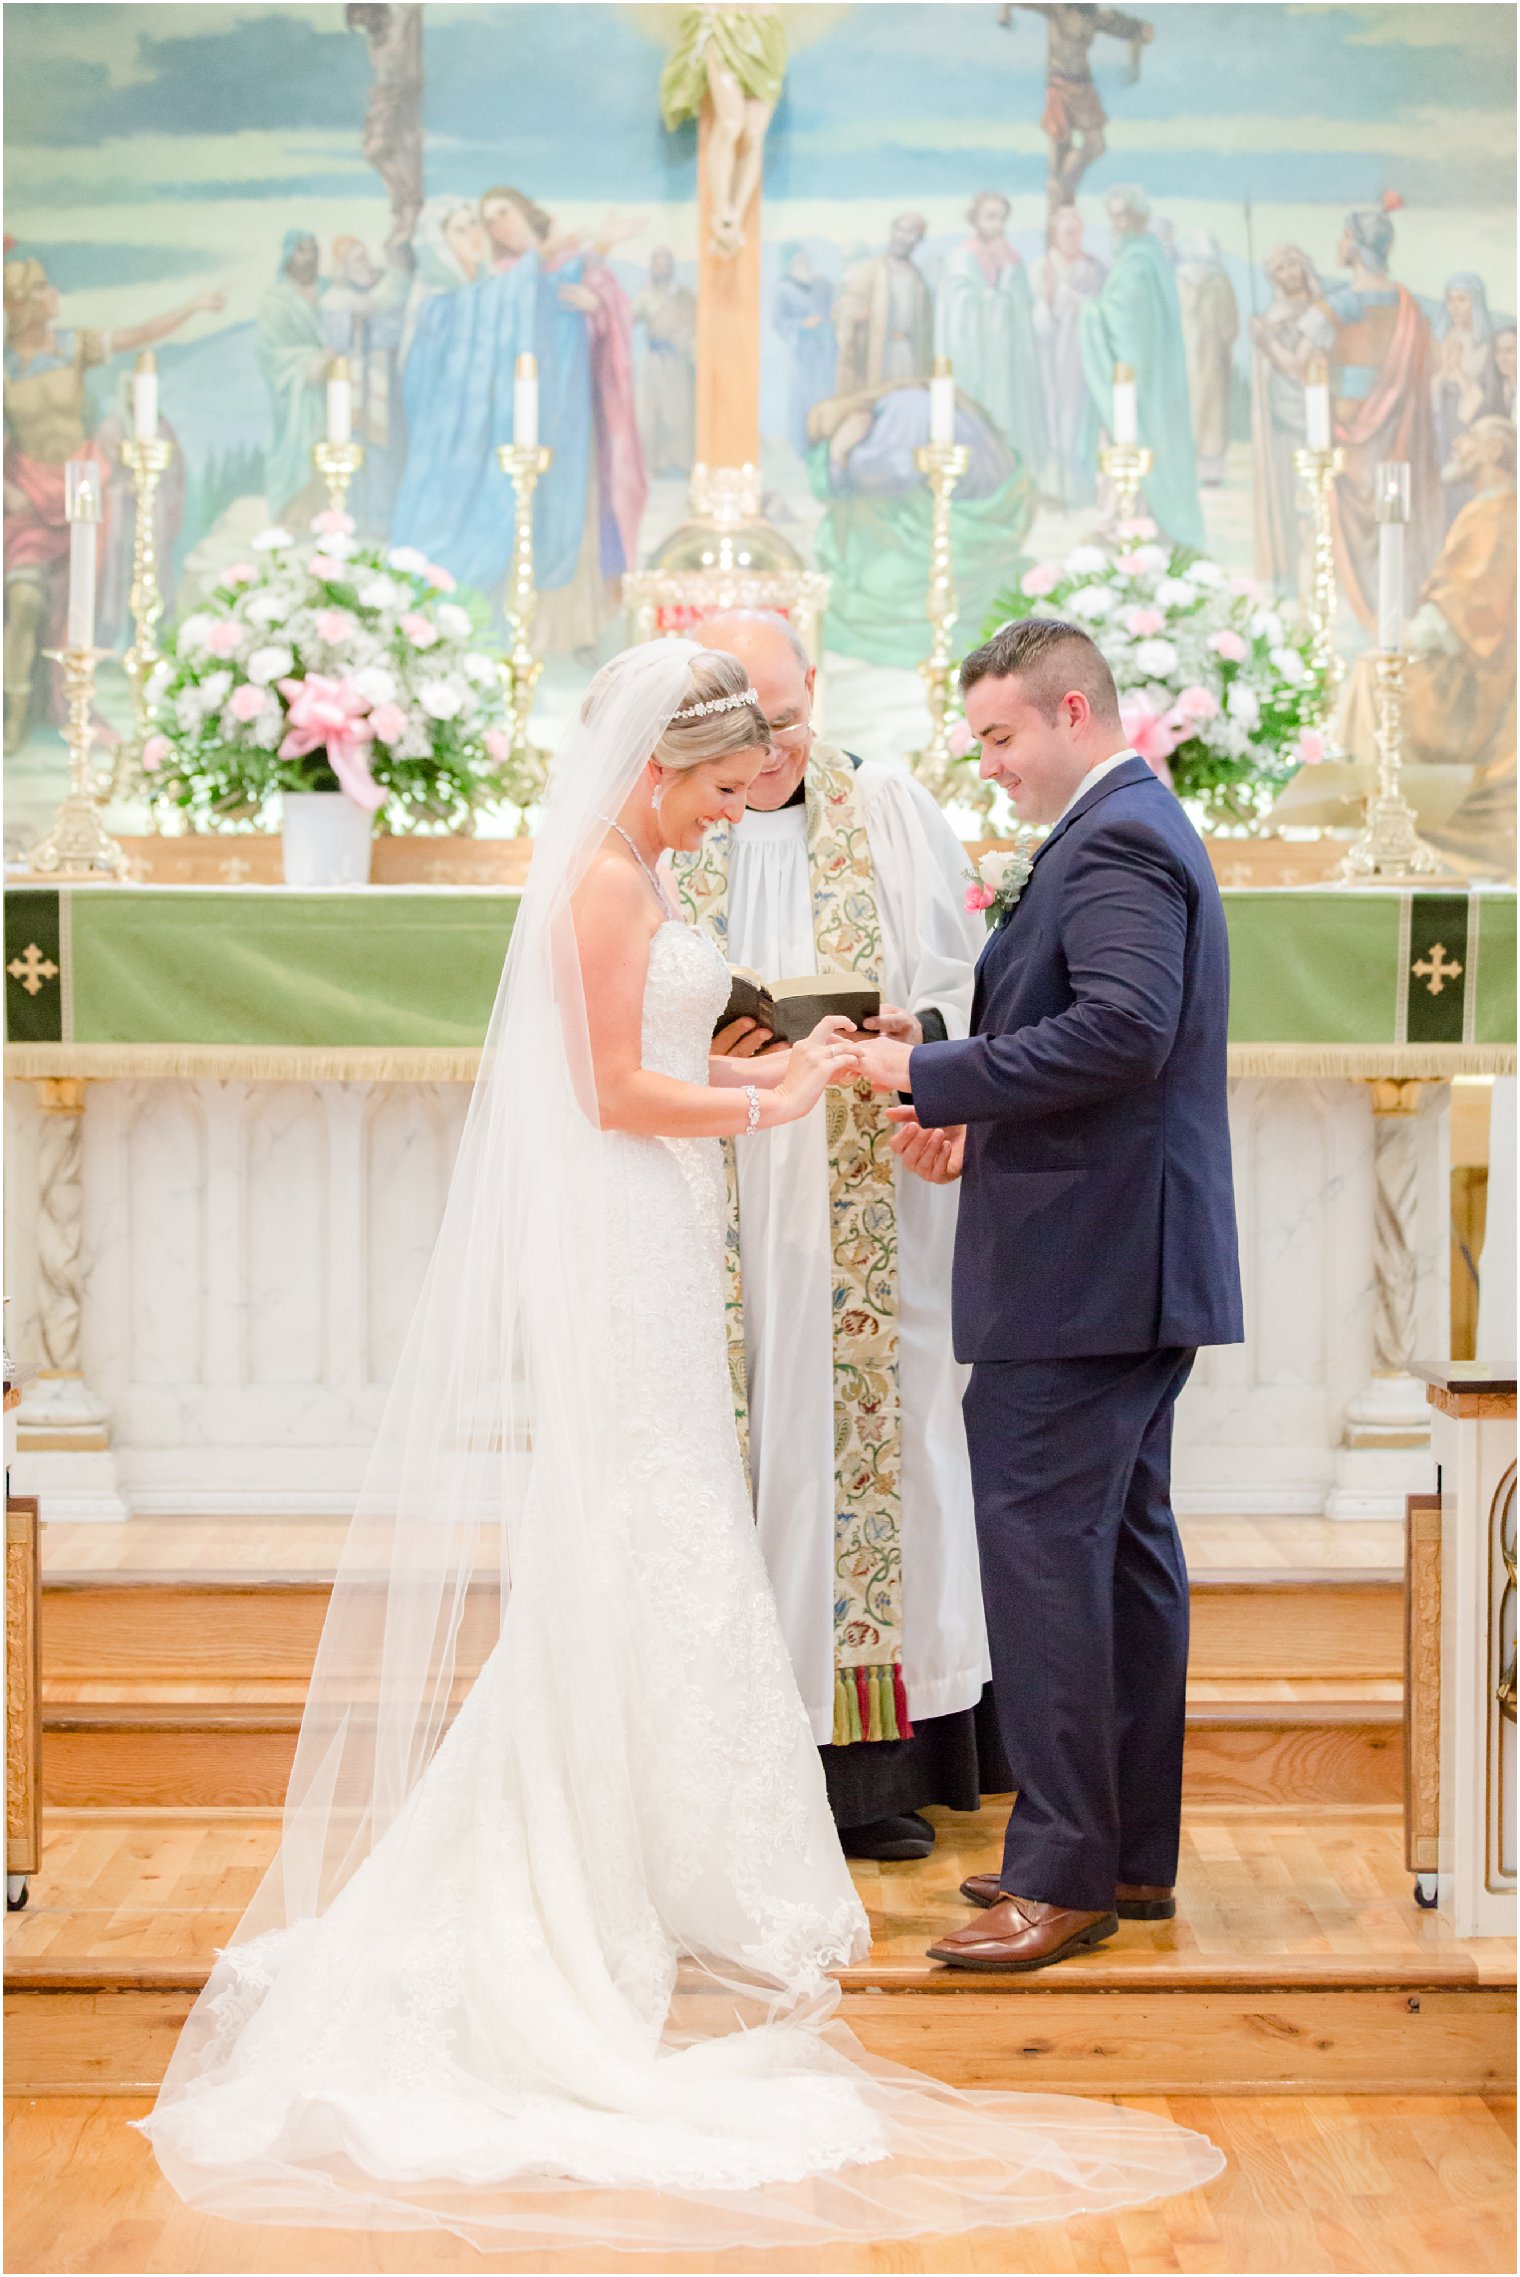 Somerset NJ wedding ceremony exchange of rings photographed by Idalia Photography